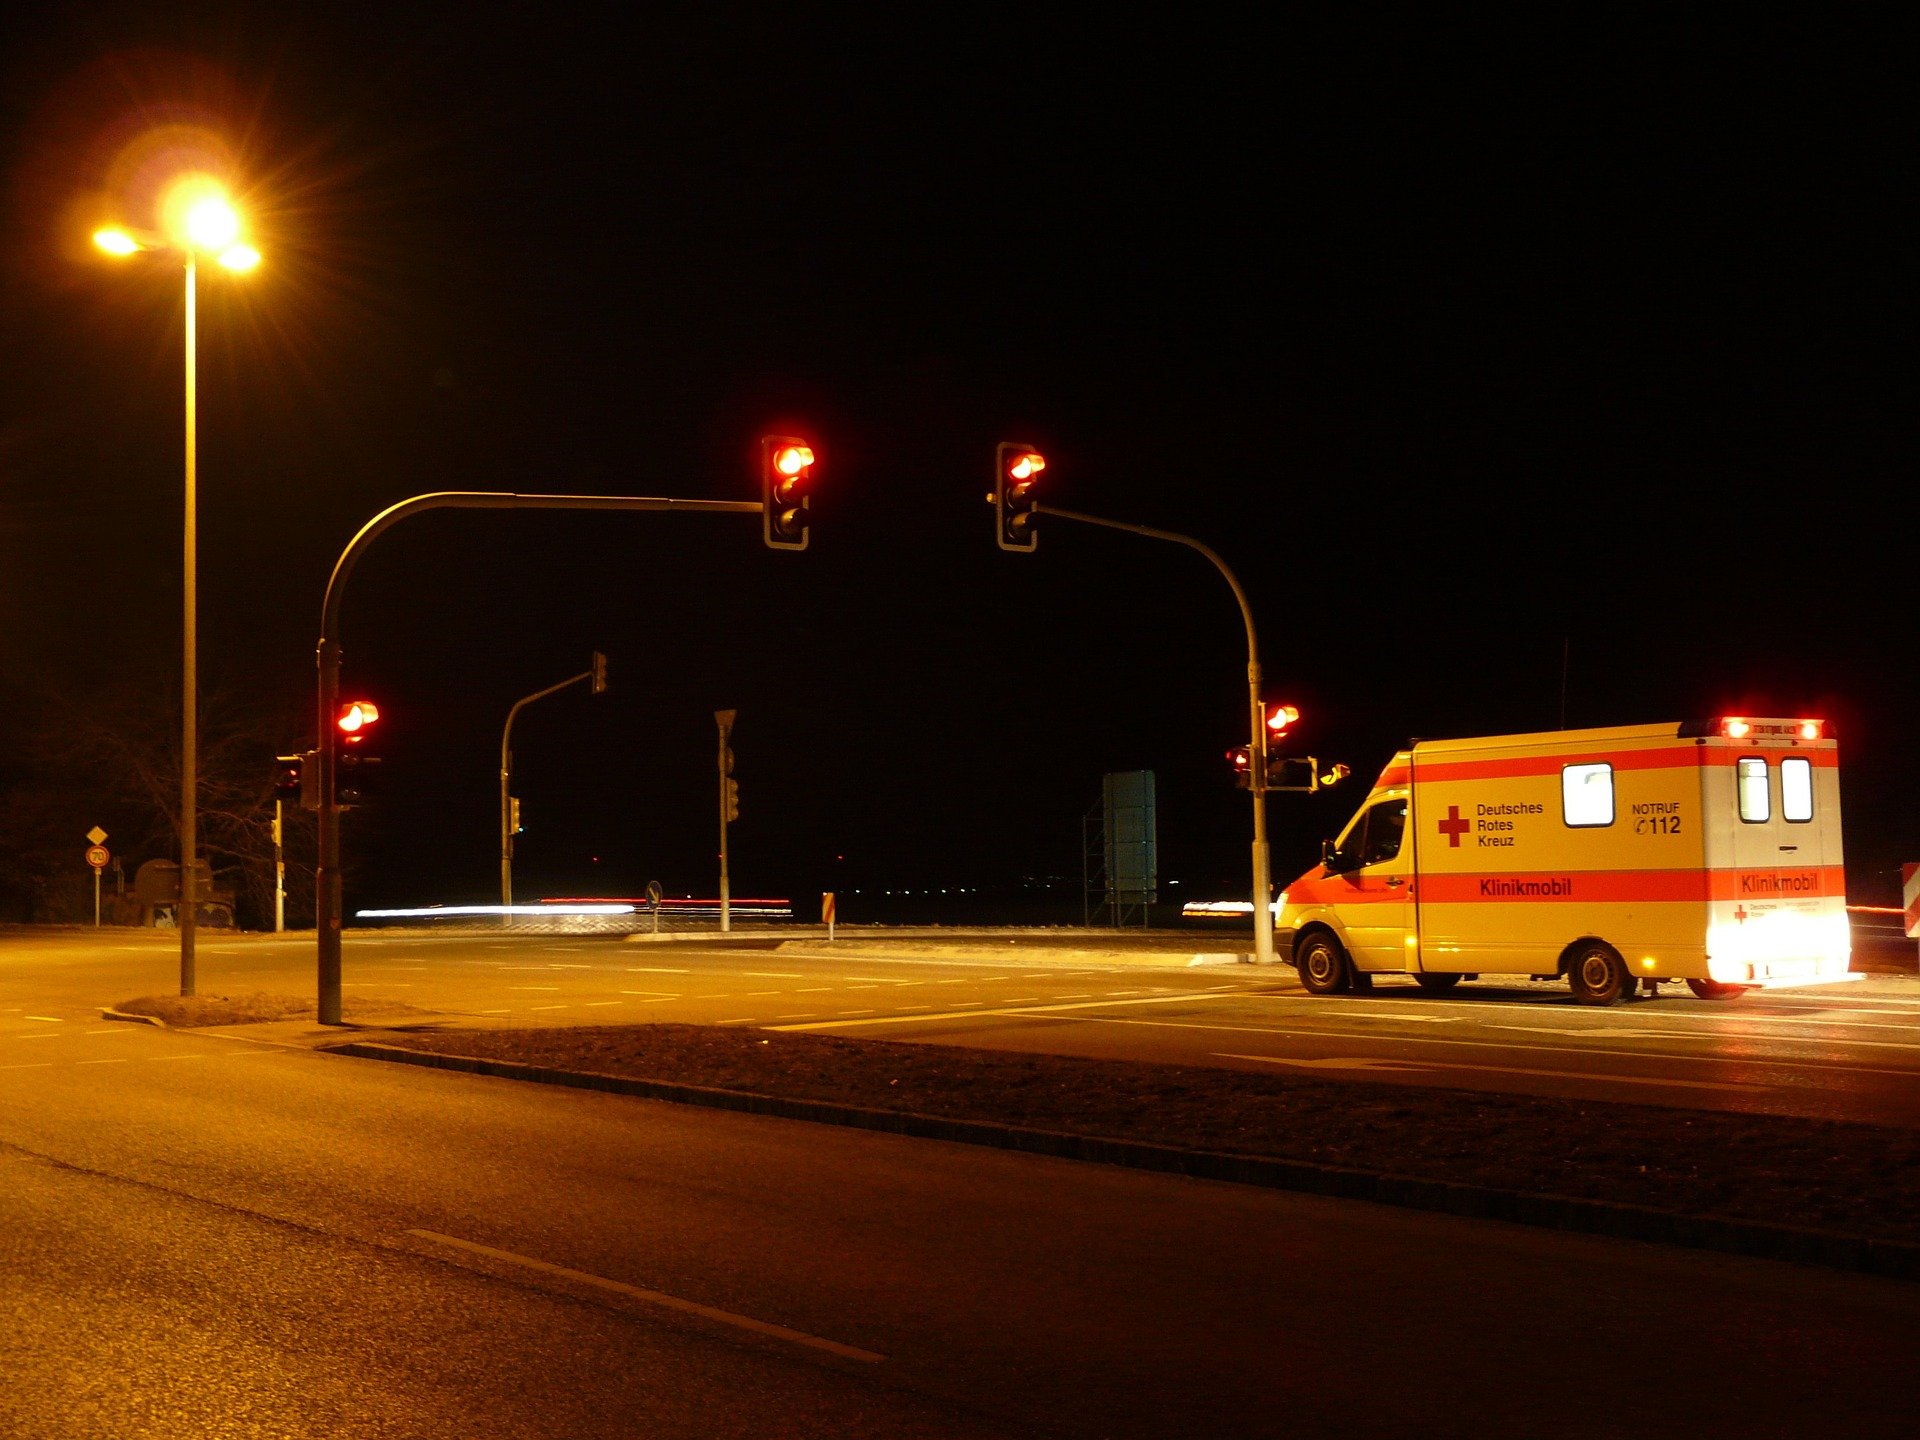 An ambulance at the traffic lights at night | Source: Pixabay